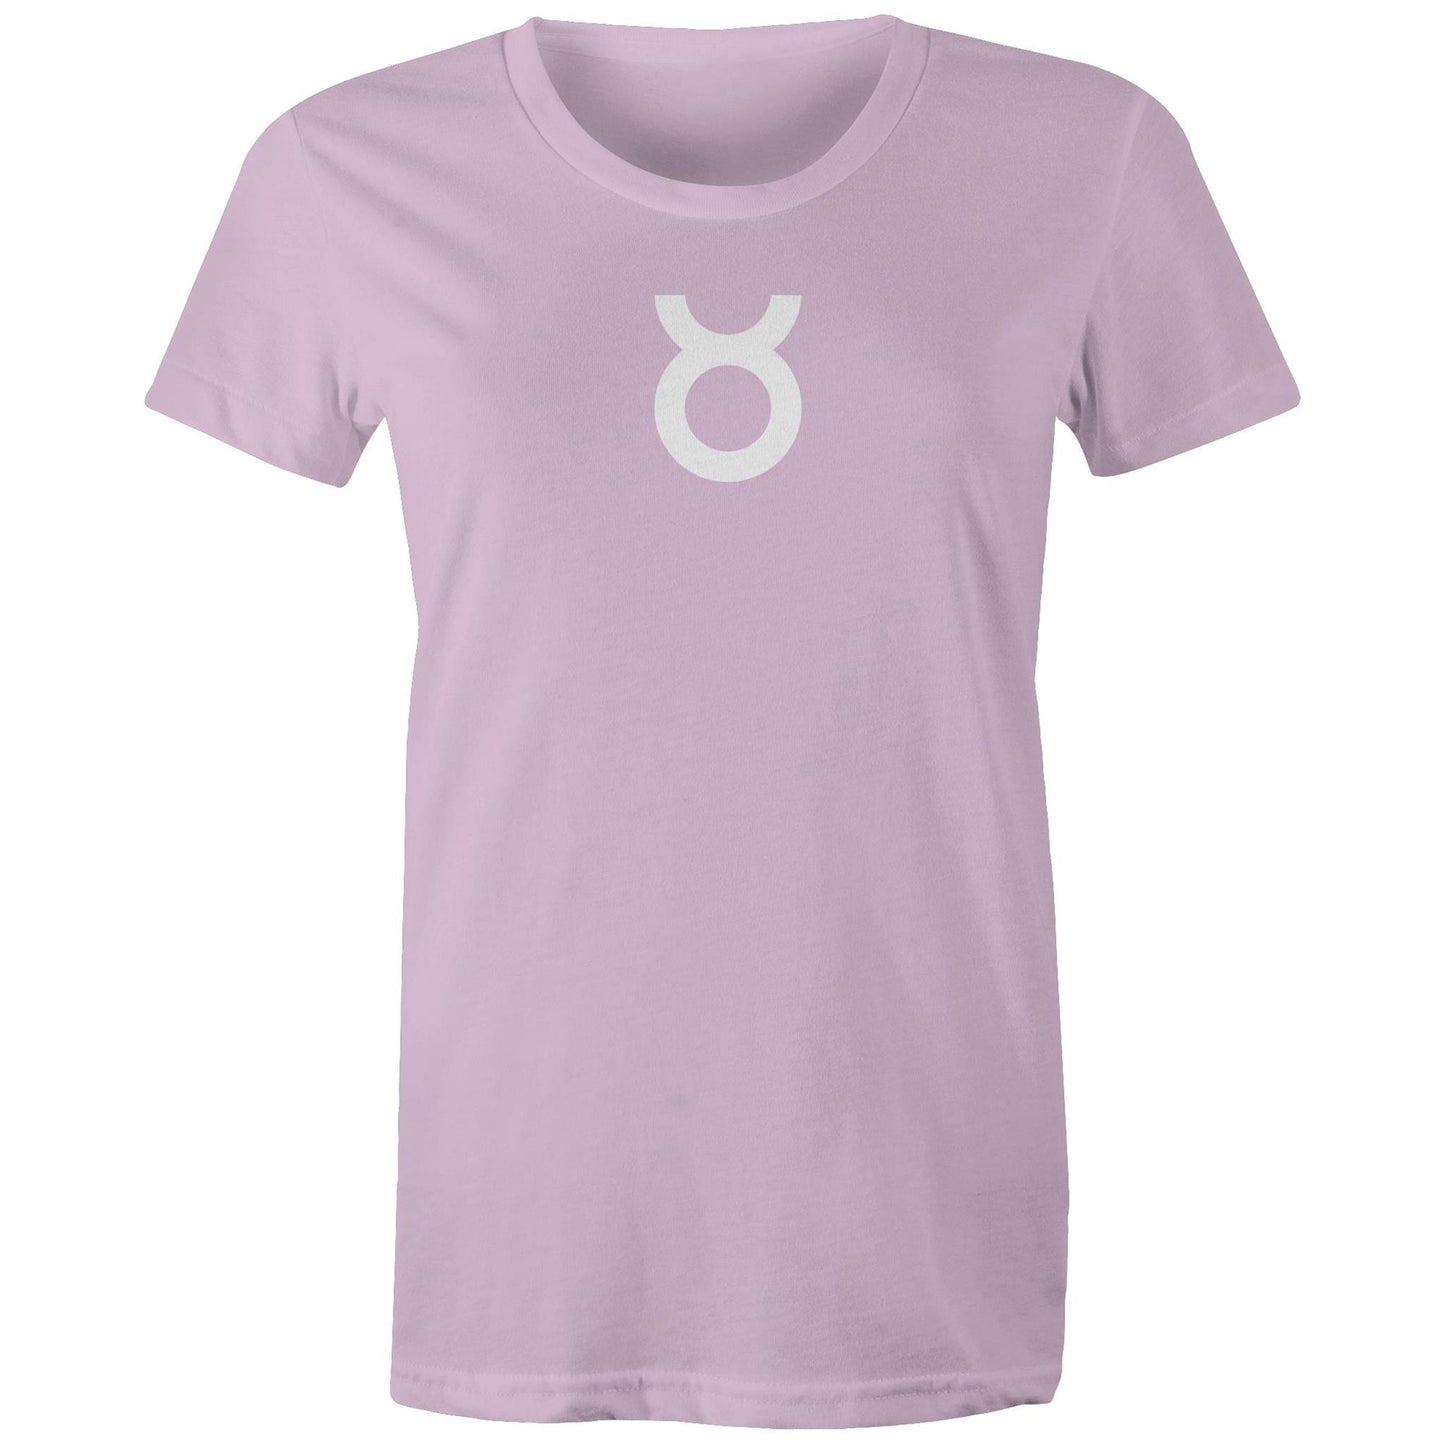 Taurus T Shirts for Women